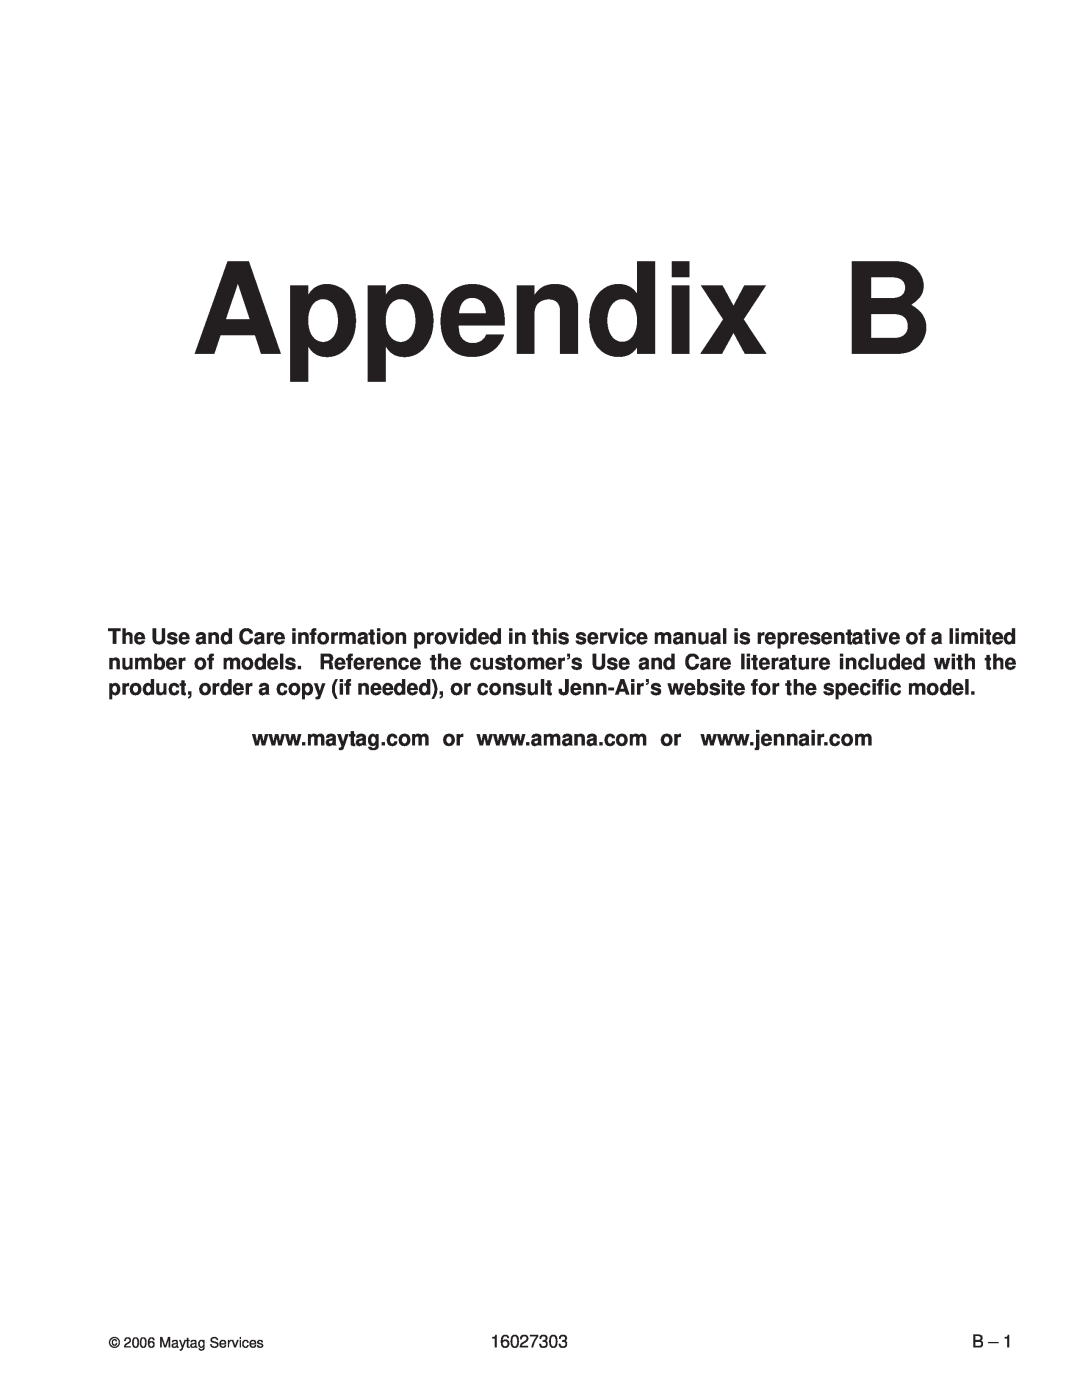 Maytag UMV1152CA manual Appendix B, 16027303 